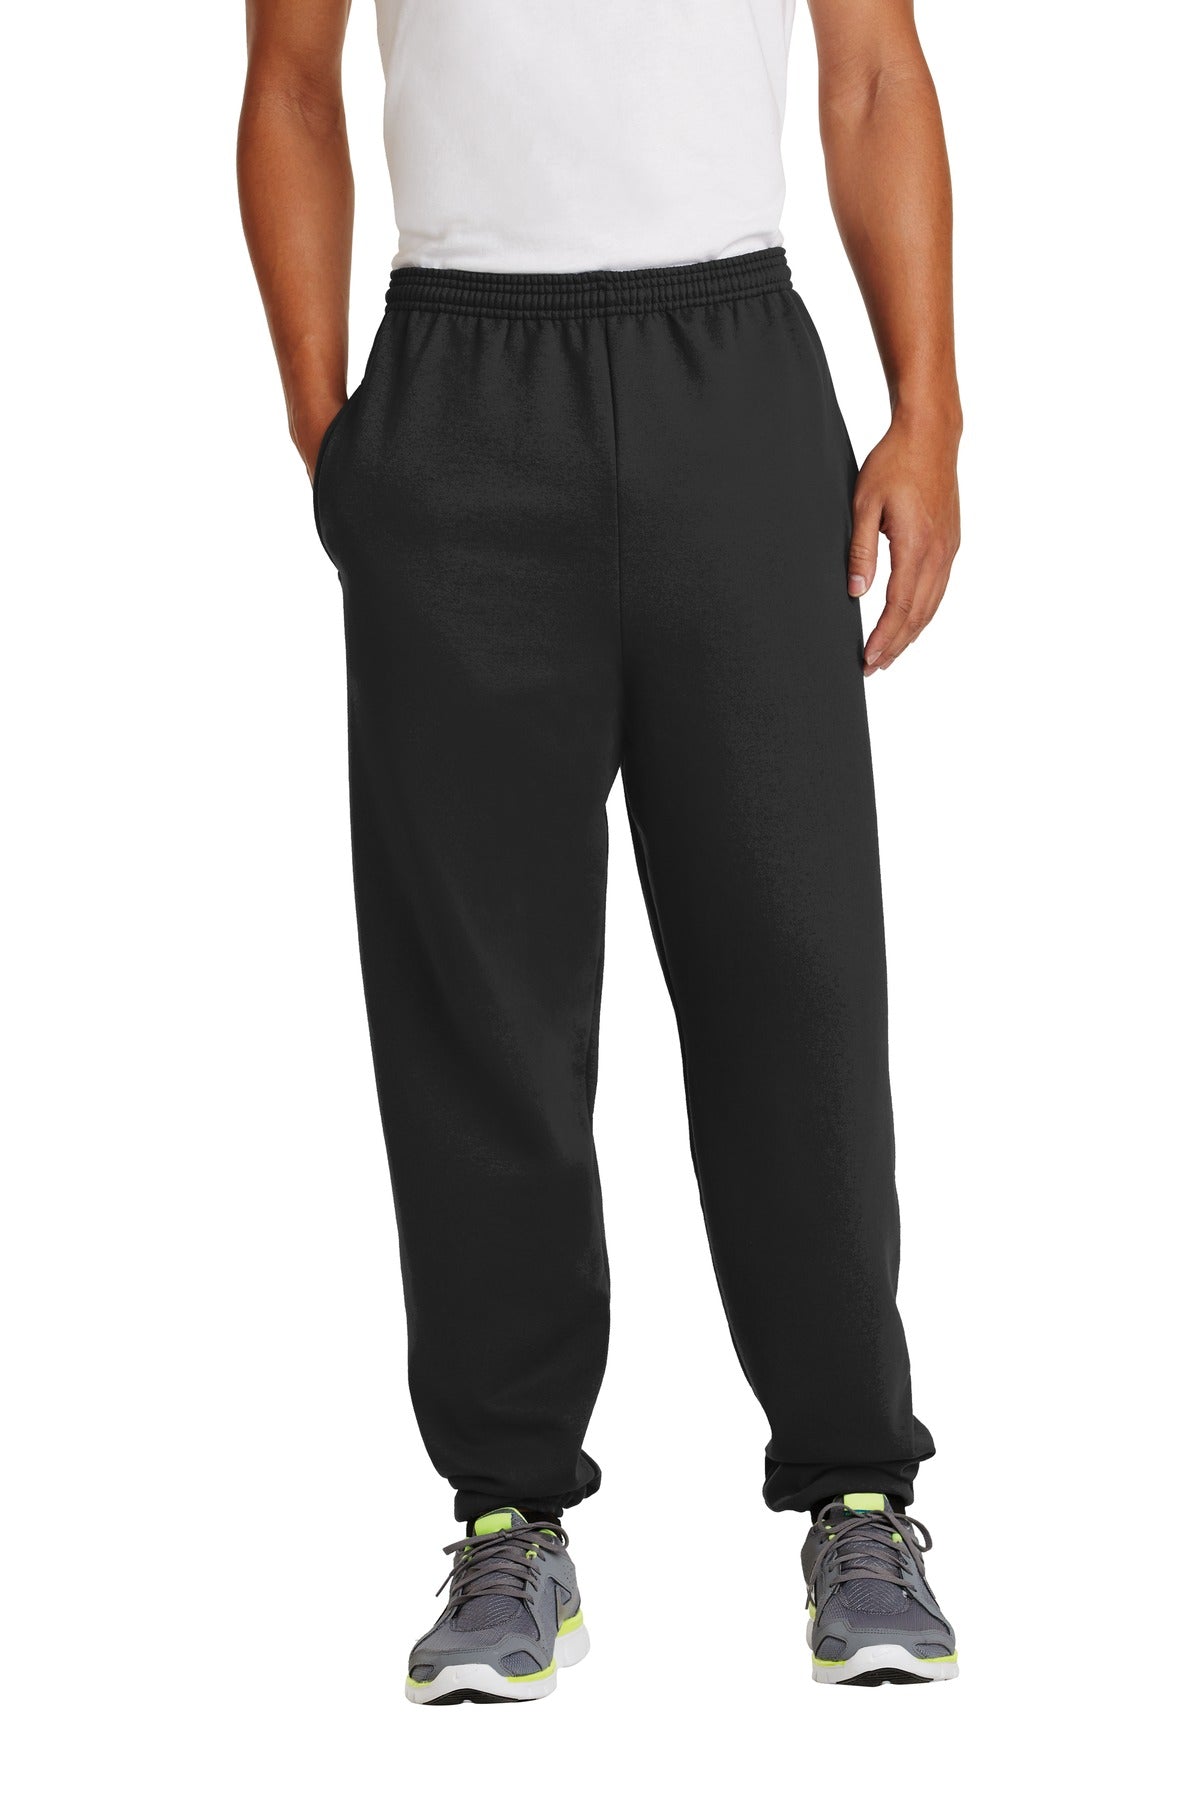 Port & Company® - Essential Fleece Sweatpant with Pockets. PC90P - DFW Impression